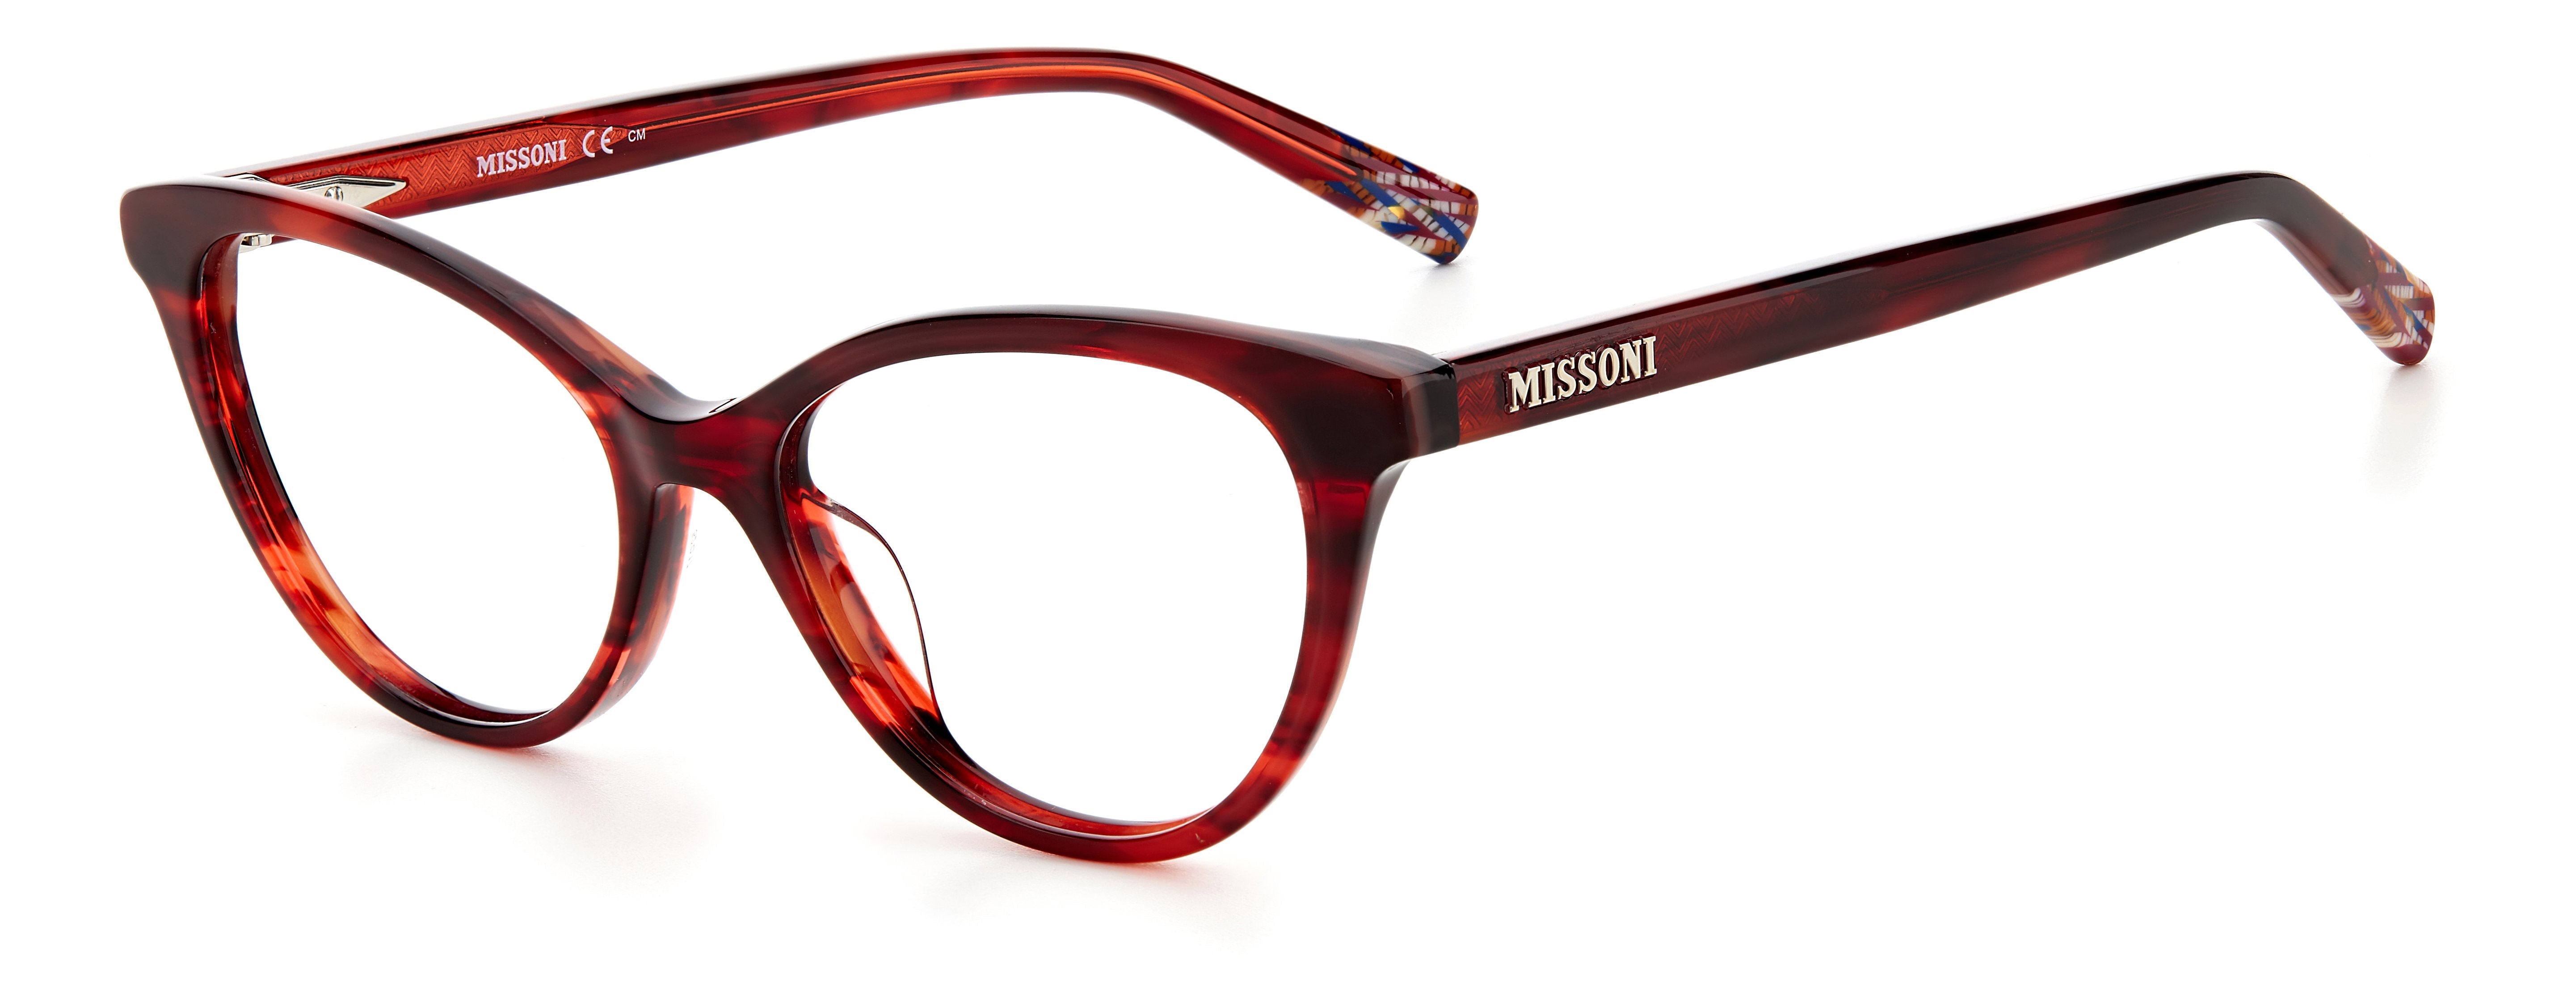 Missoni Eyeglasses Cateye Woman